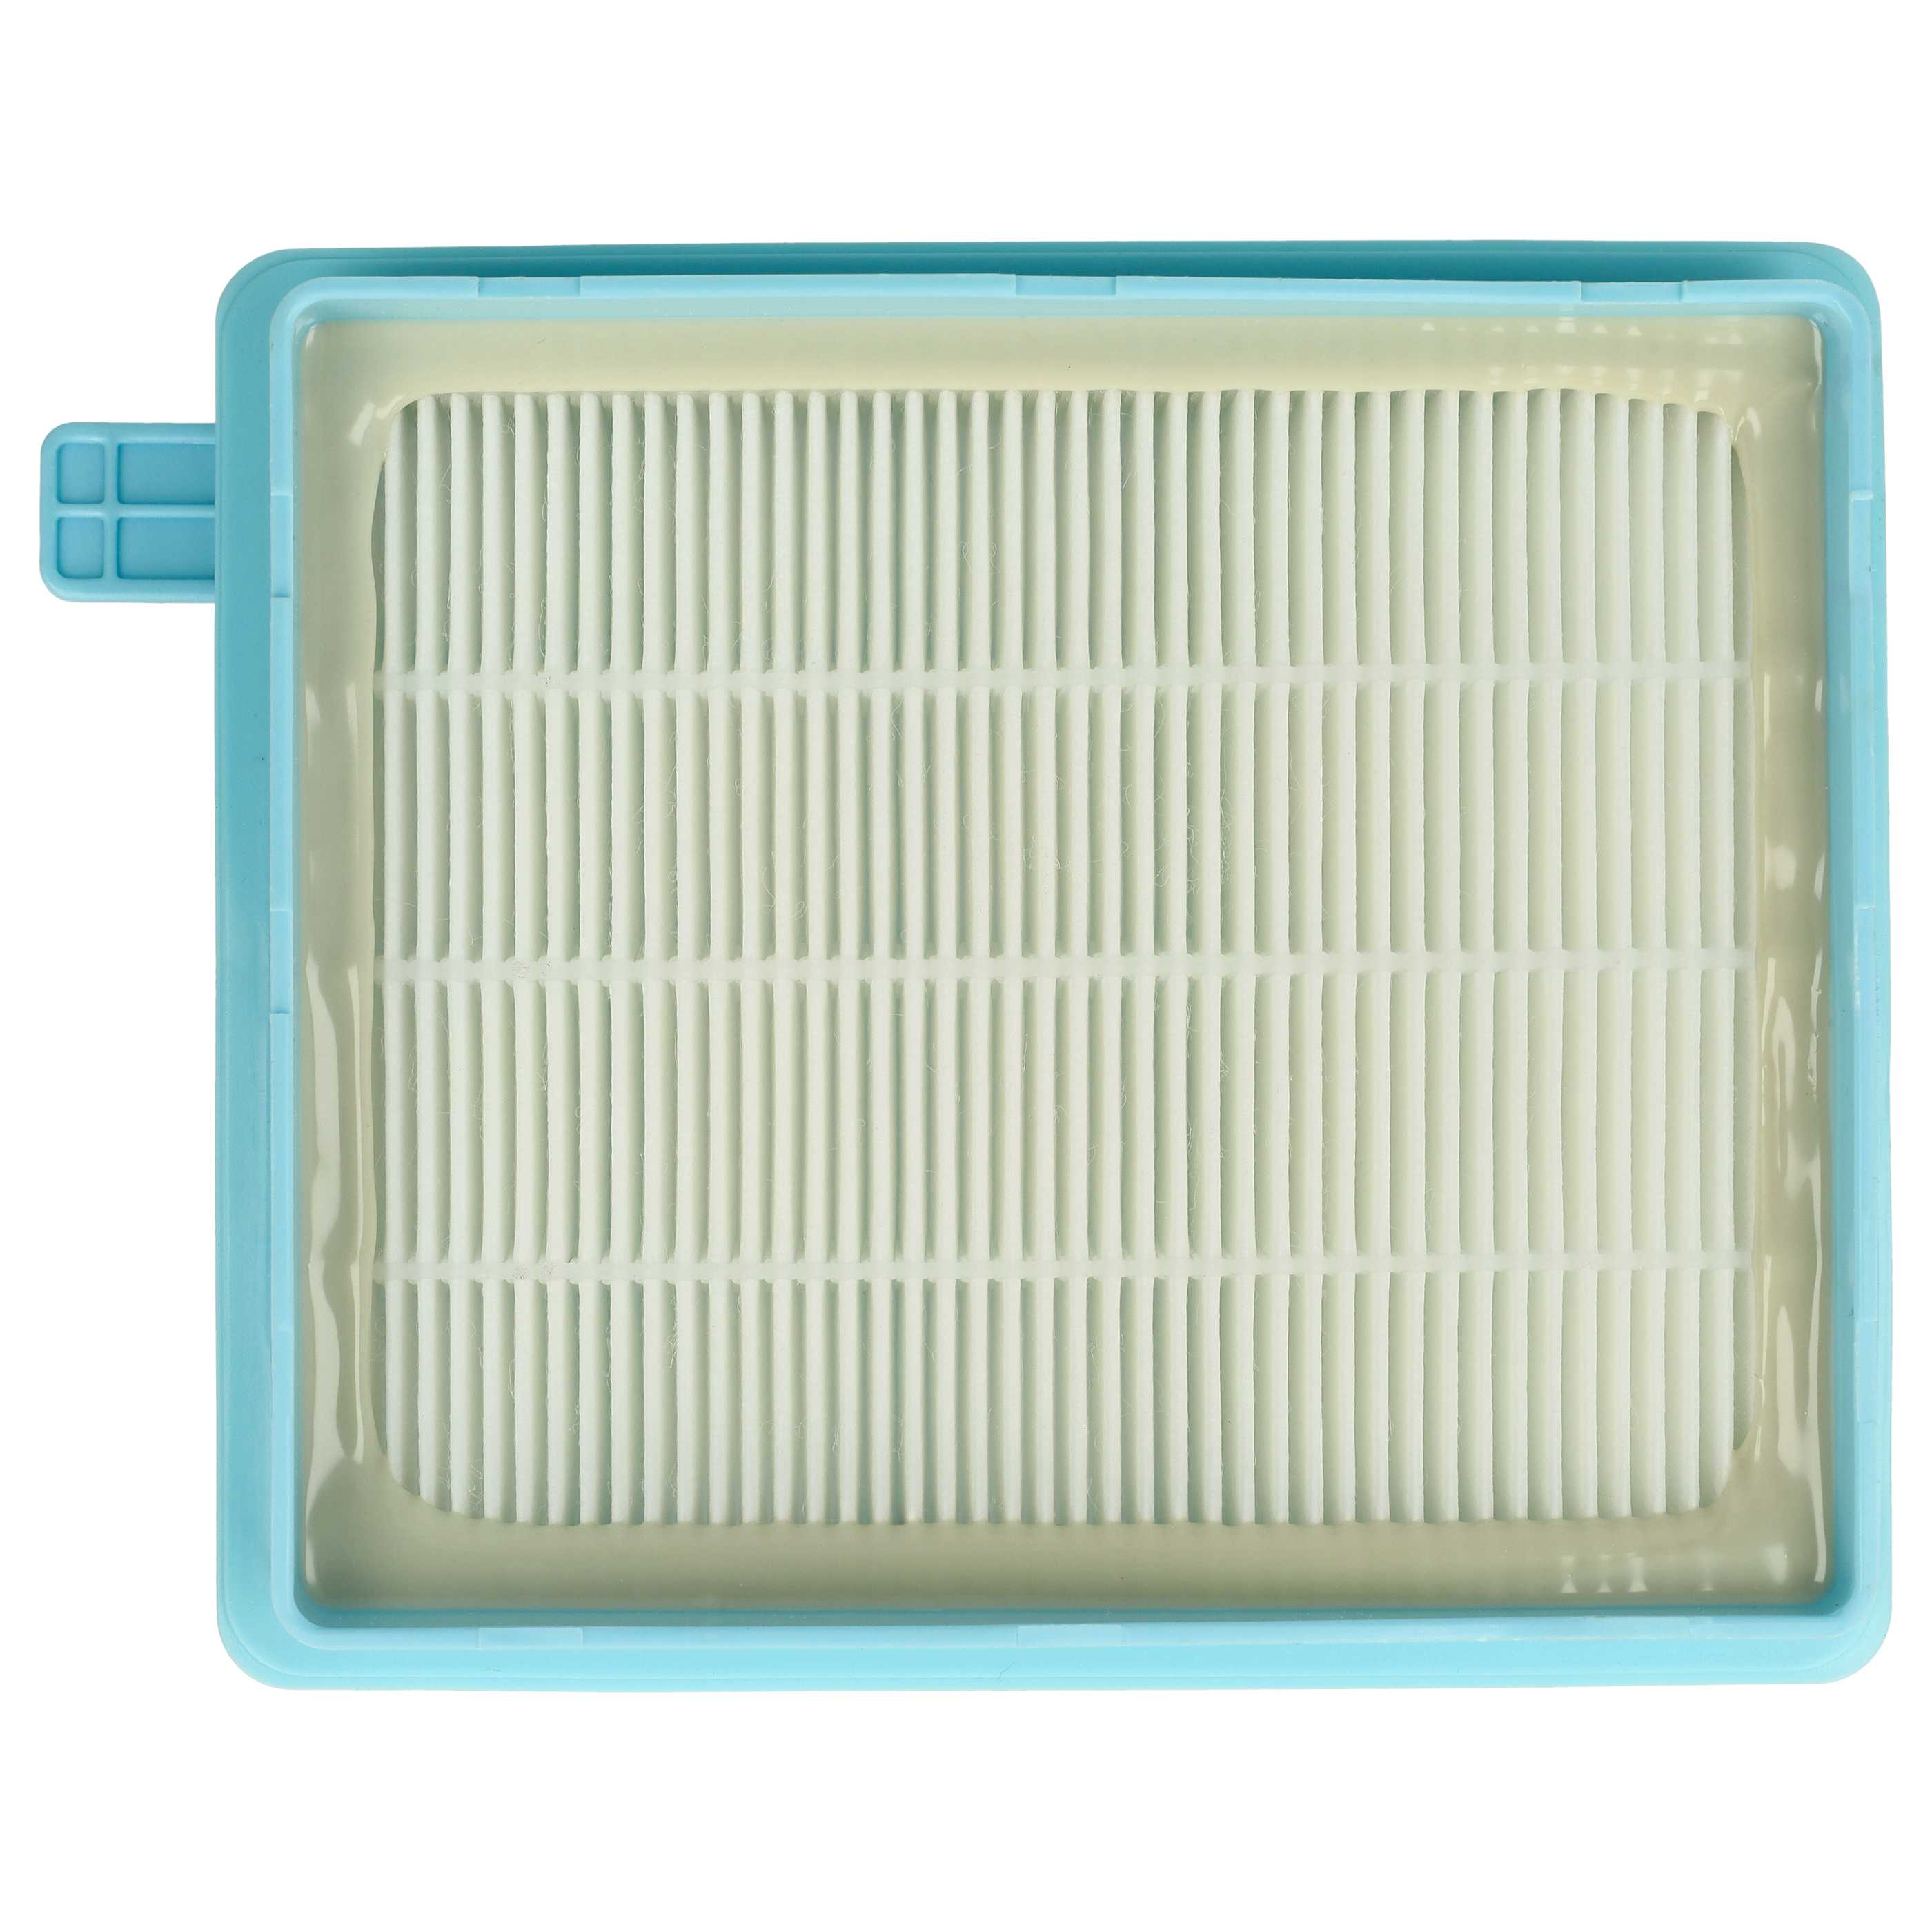 Filtro reemplaza Grundig 9178005623 para aspiradora - filtro Hepa blanco / azul claro